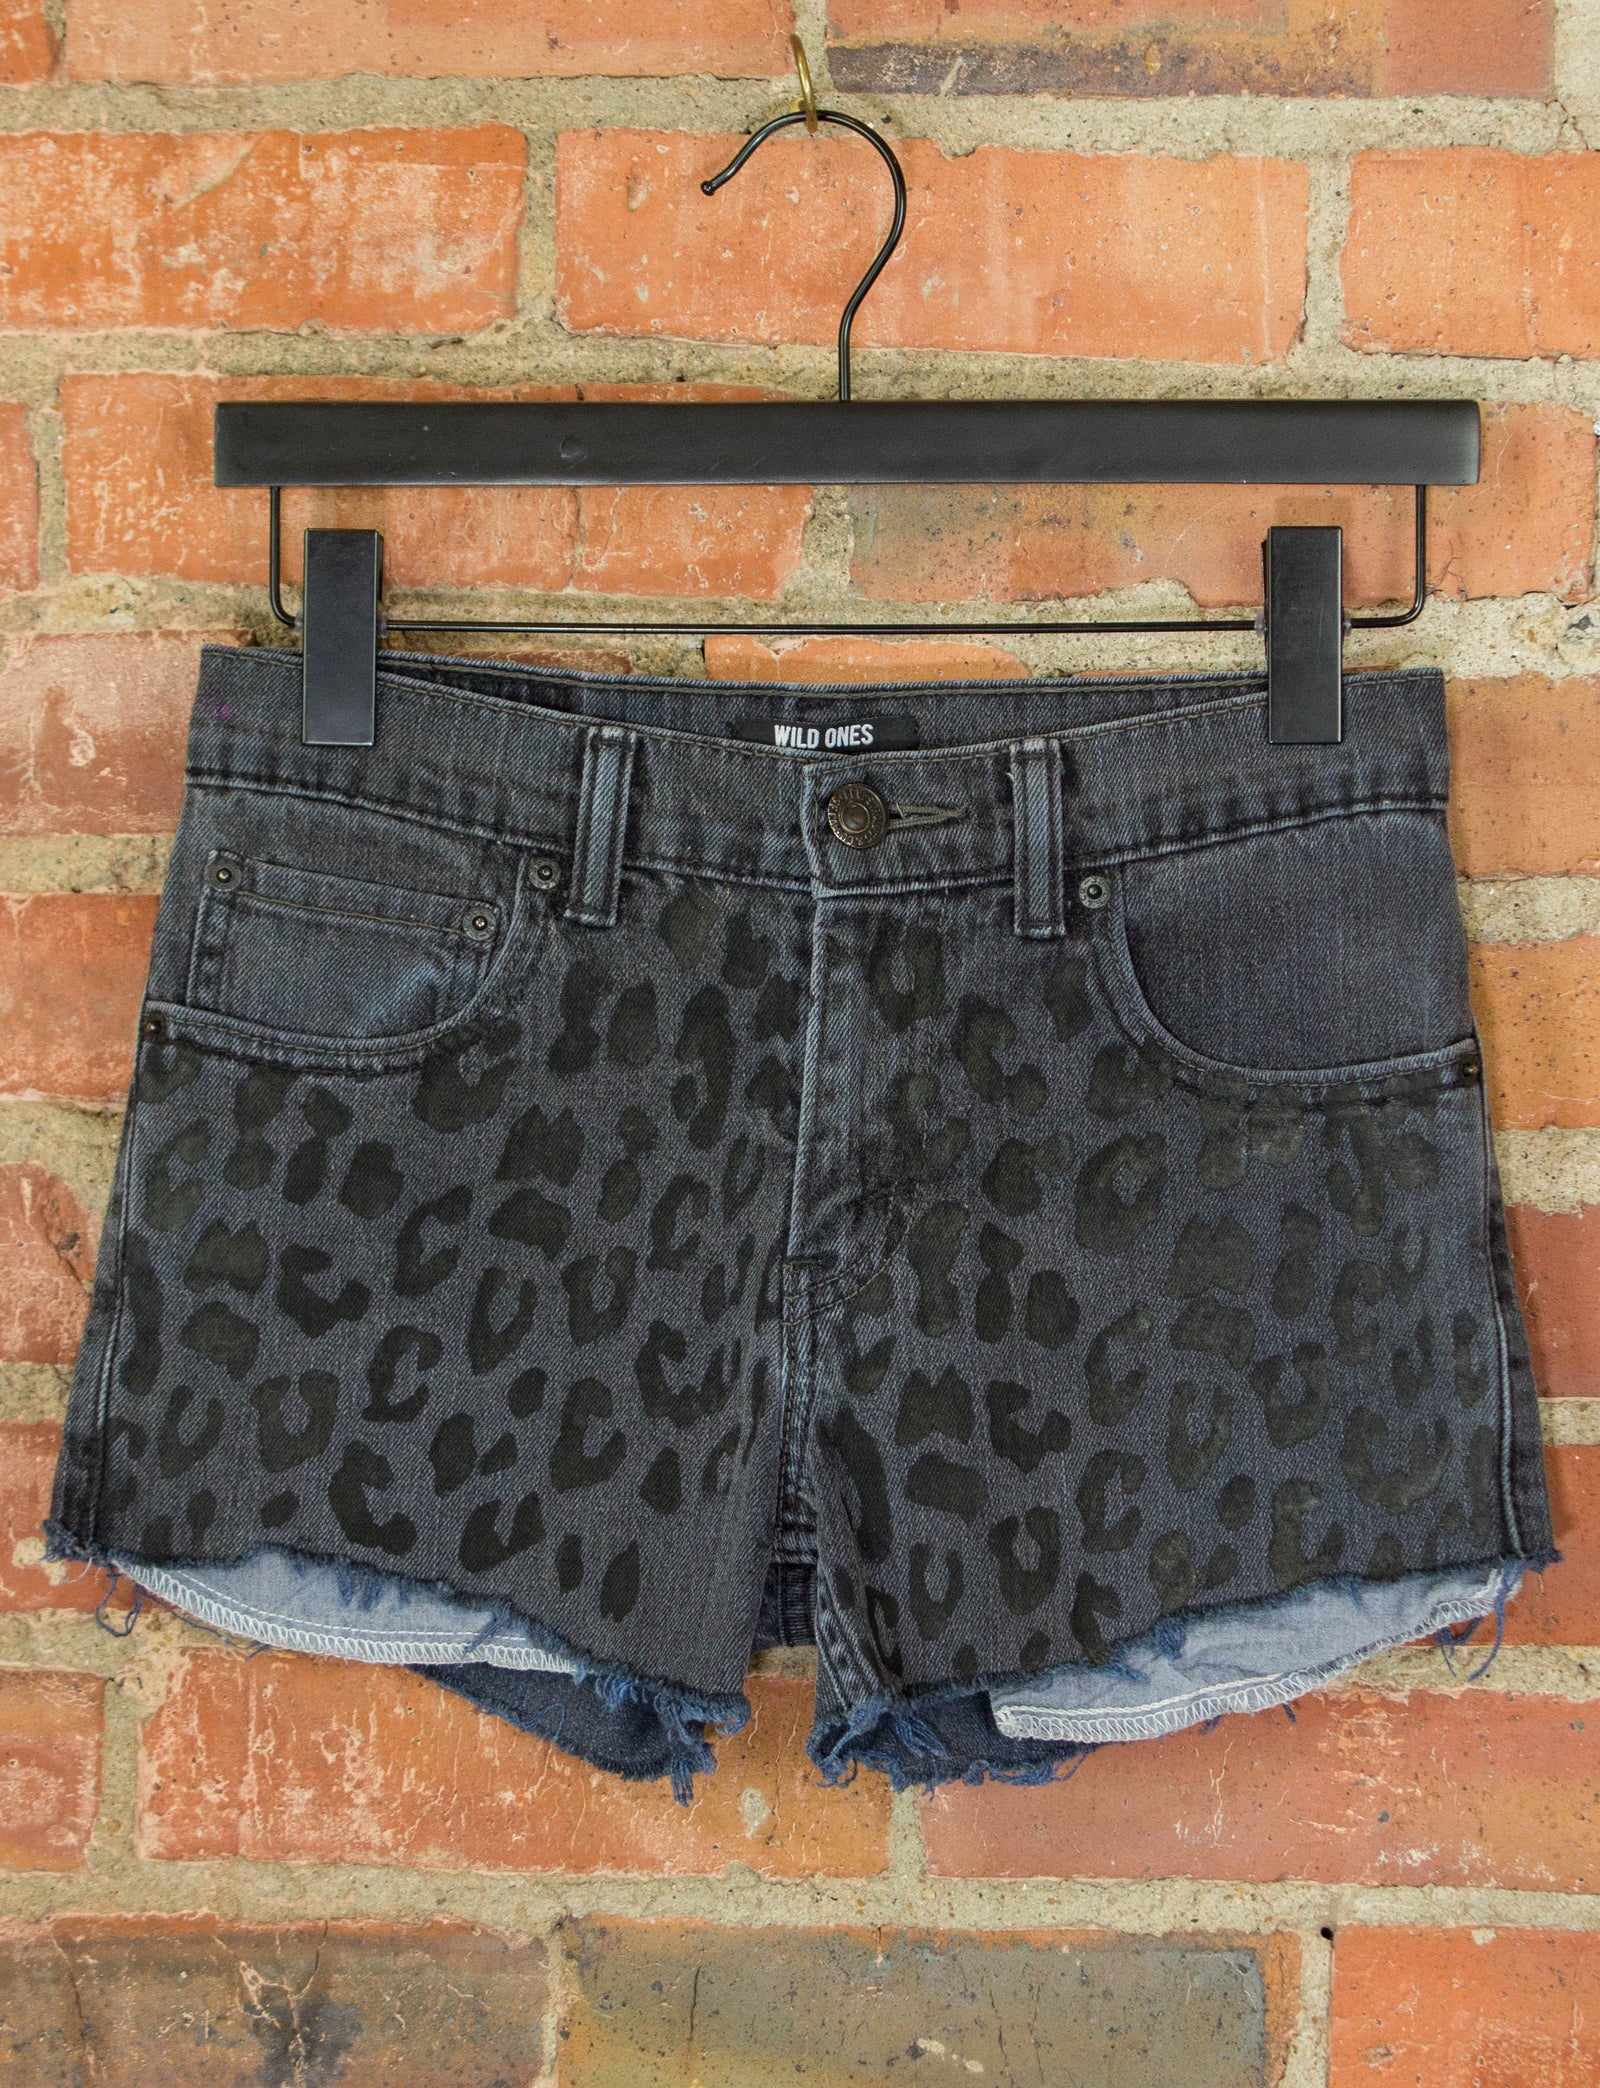 Levi's x Wild Ones Cut Off Denim Shorts 511 Slim Fit Black Leopard Pri –  Black Shag Vintage